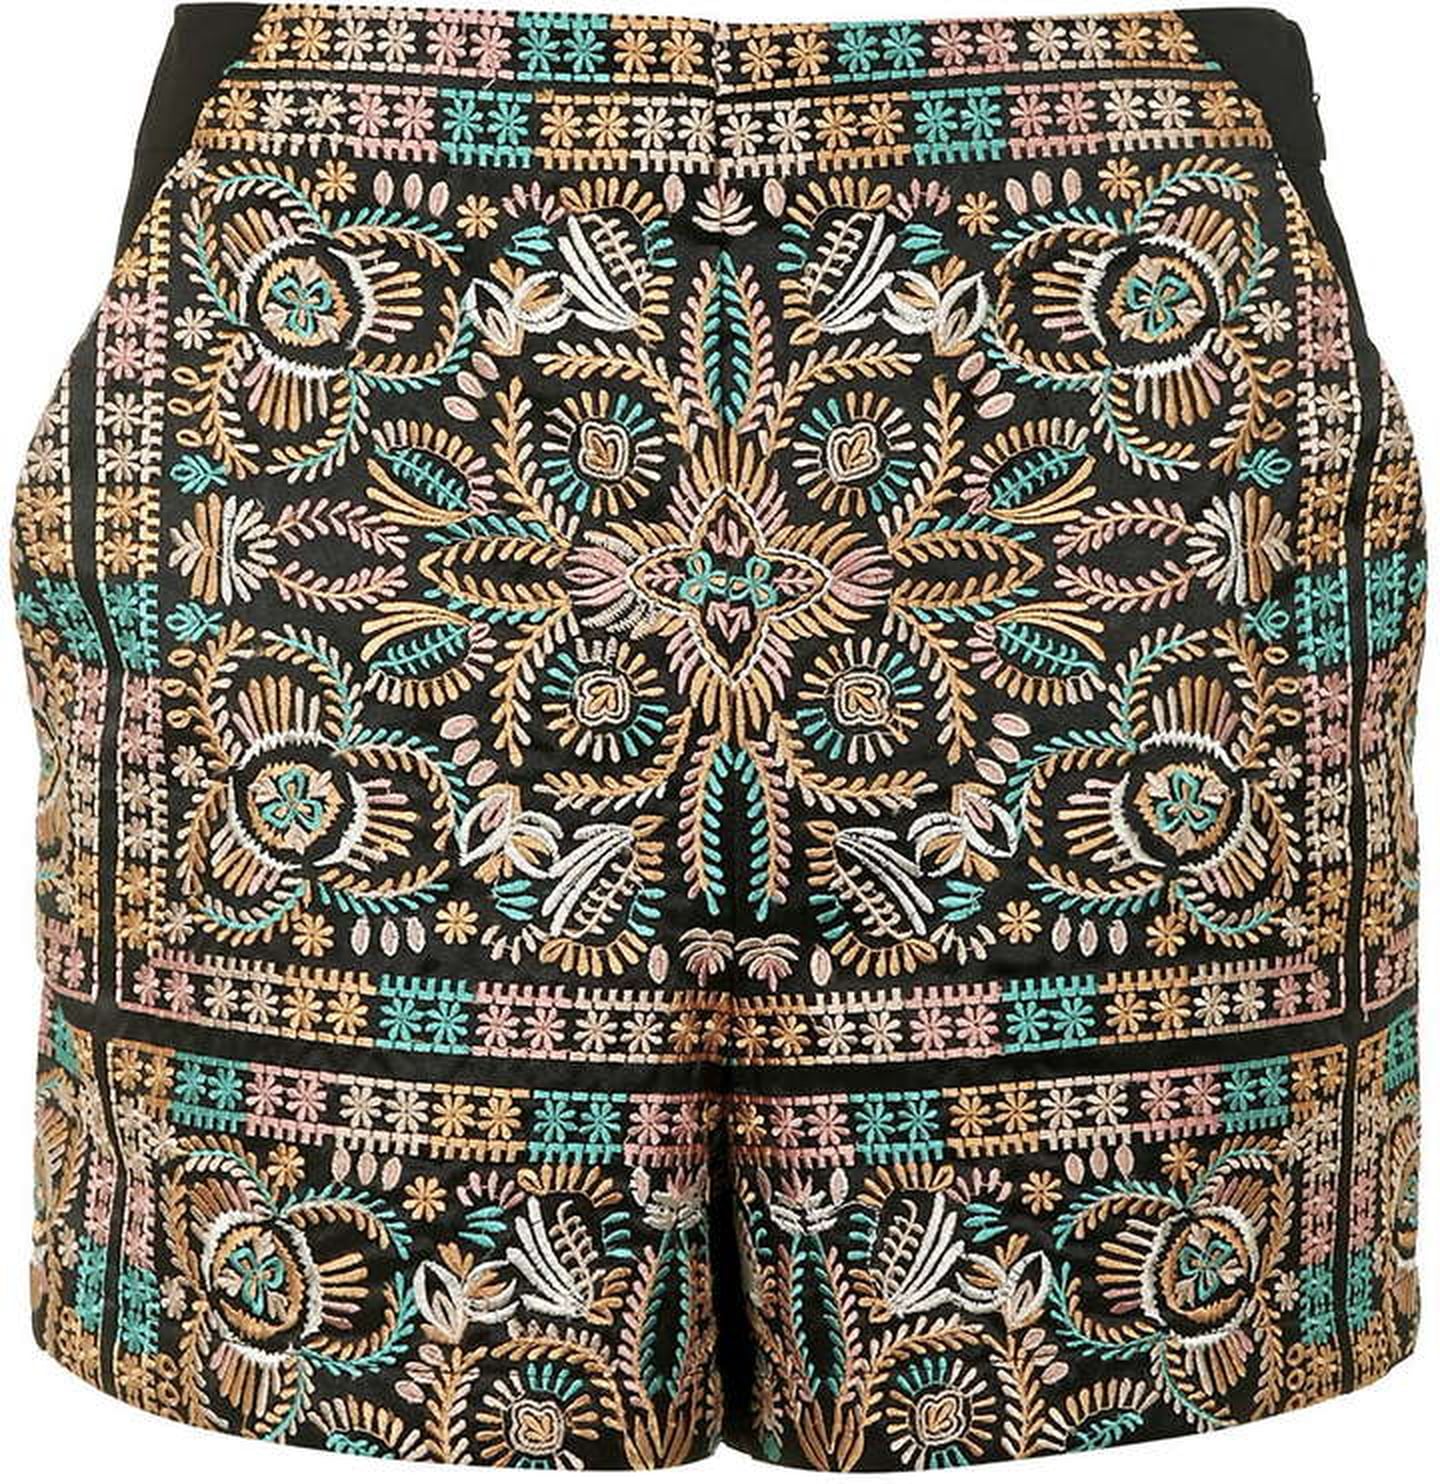 Shorts For Summer | POPSUGAR Fashion